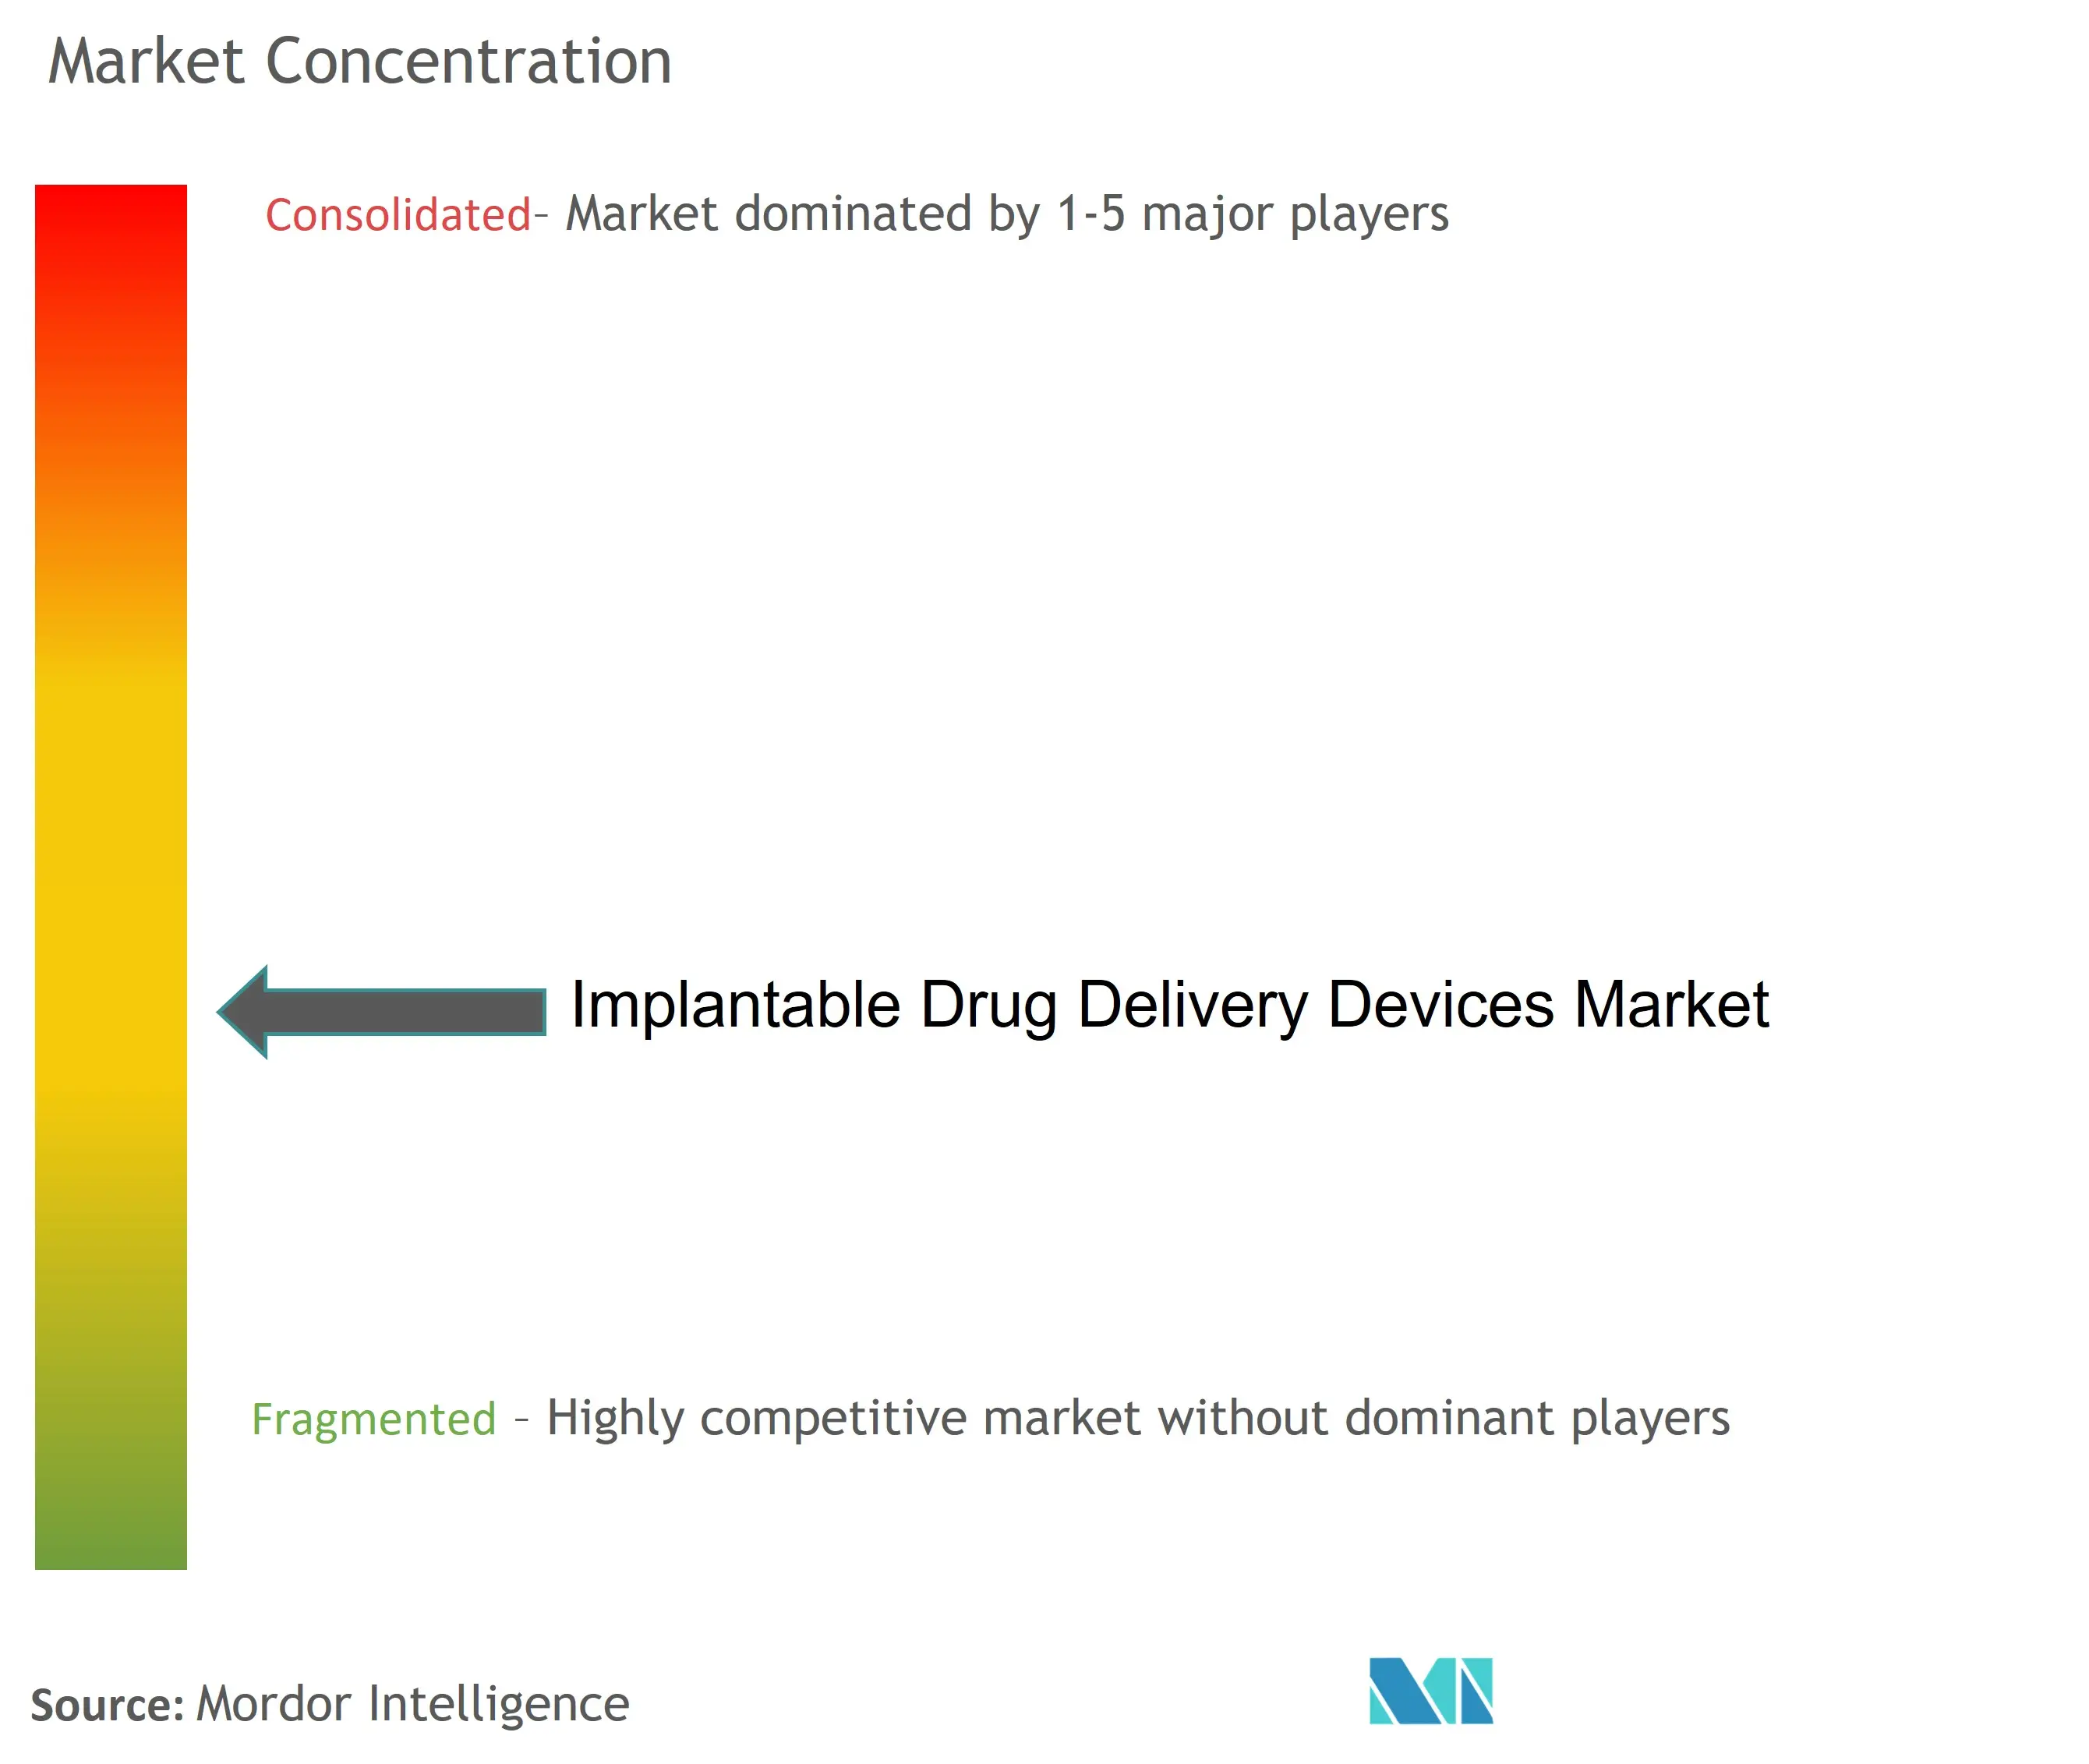 Implantable Drug Delivery Devices Market Concentration